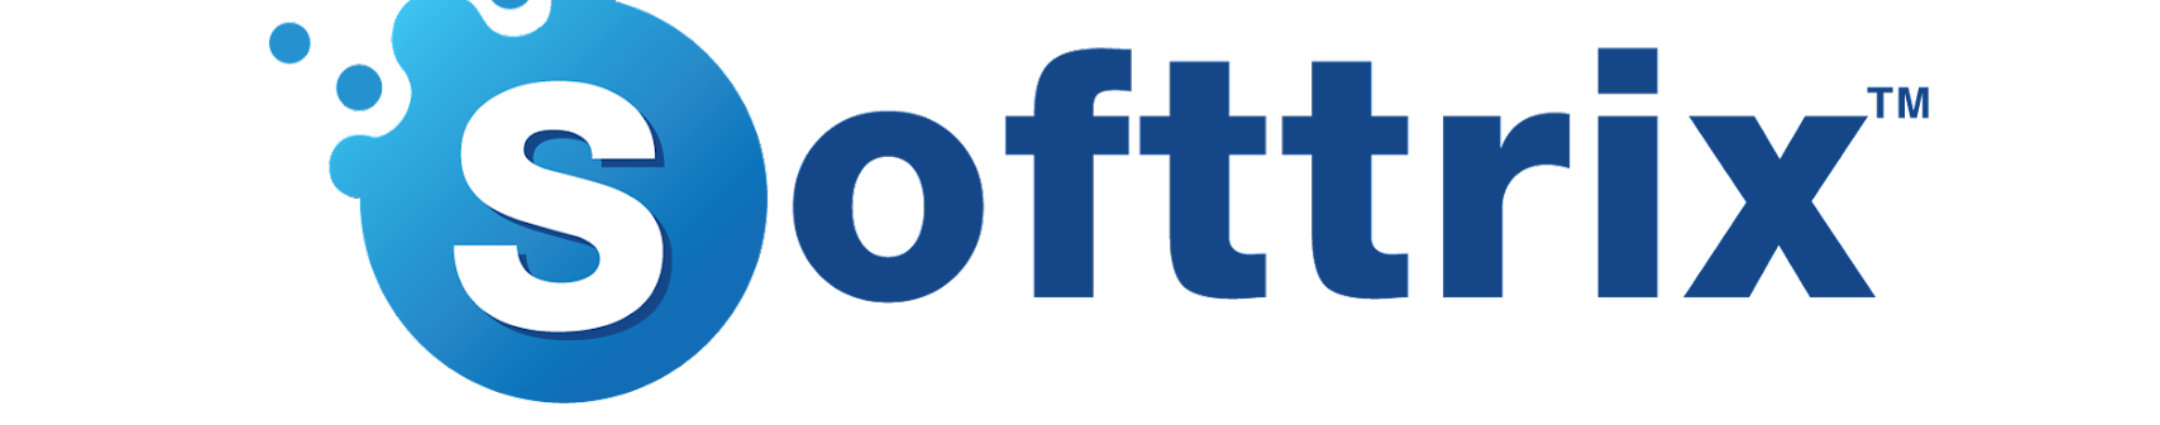 Softtrix Tech's profile banner